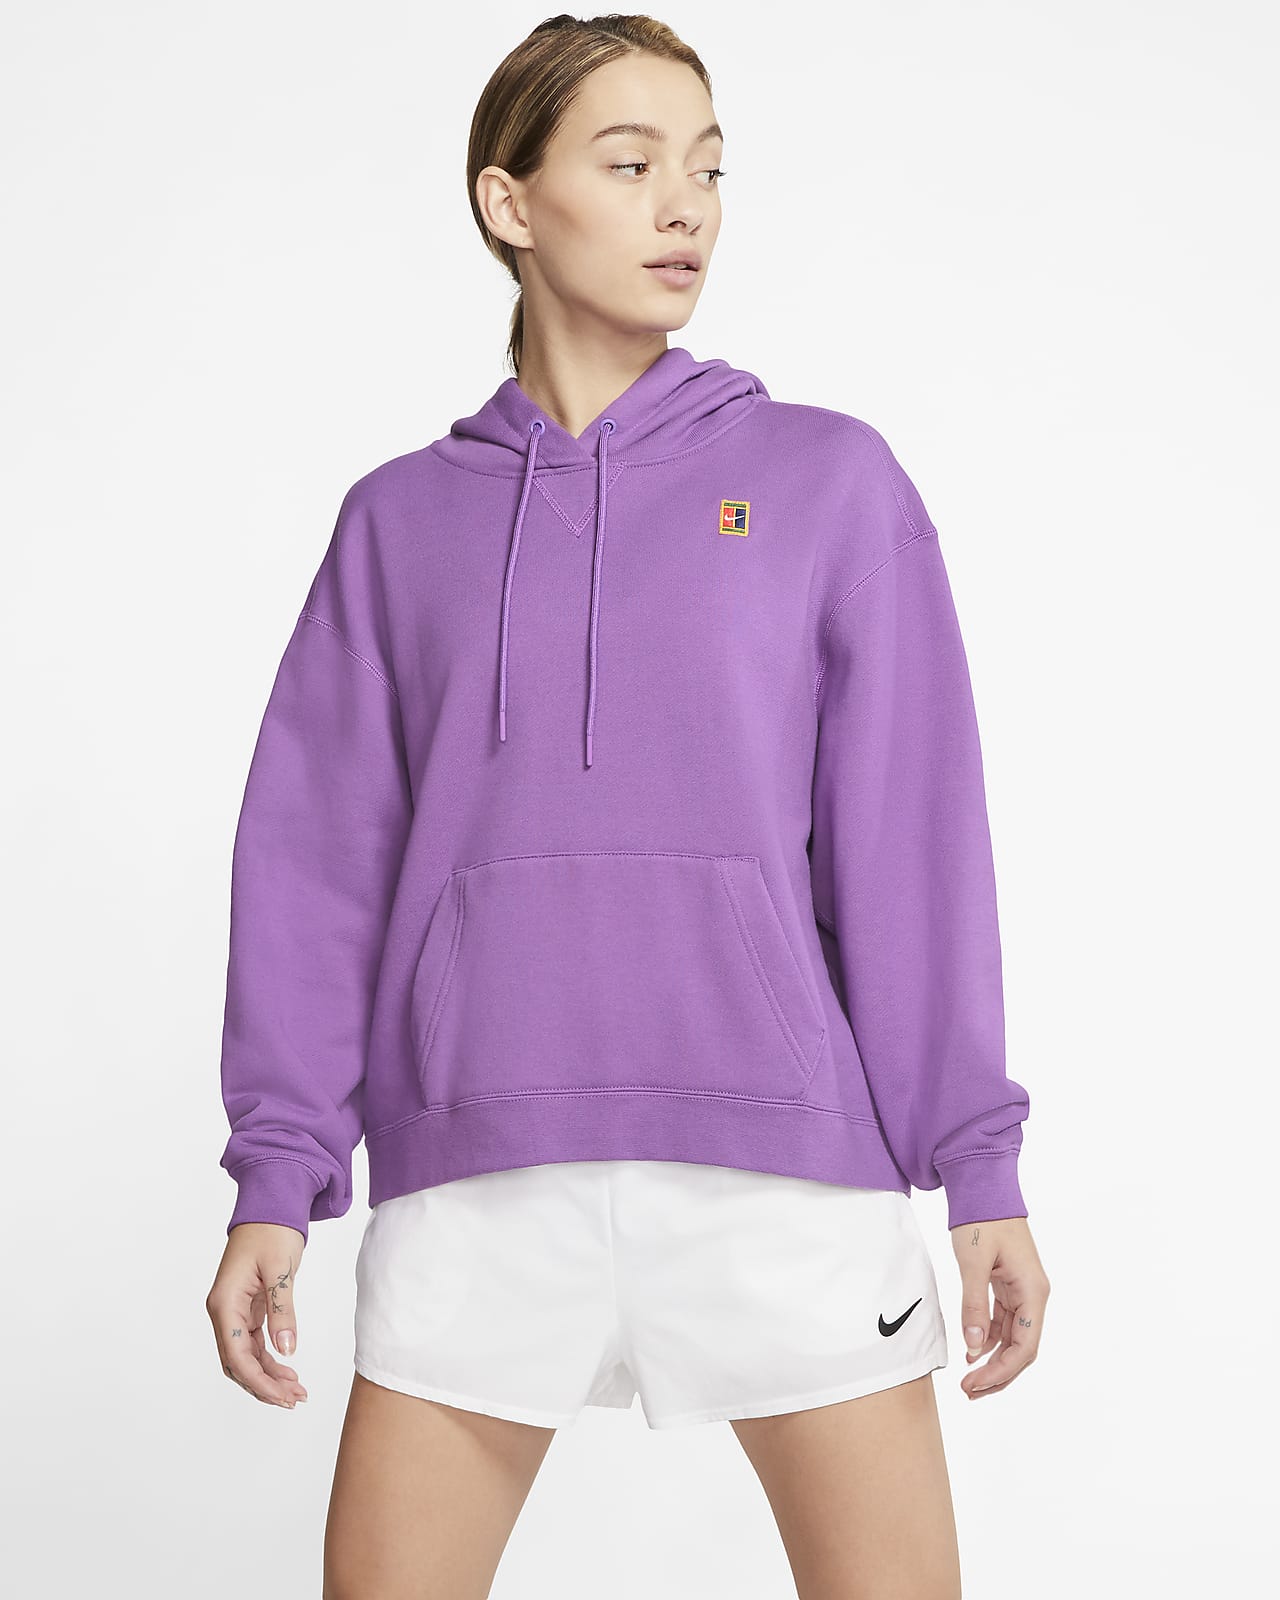 Nike Dri-FIT Performance Women's Tennis Hoodie - Medium Olive